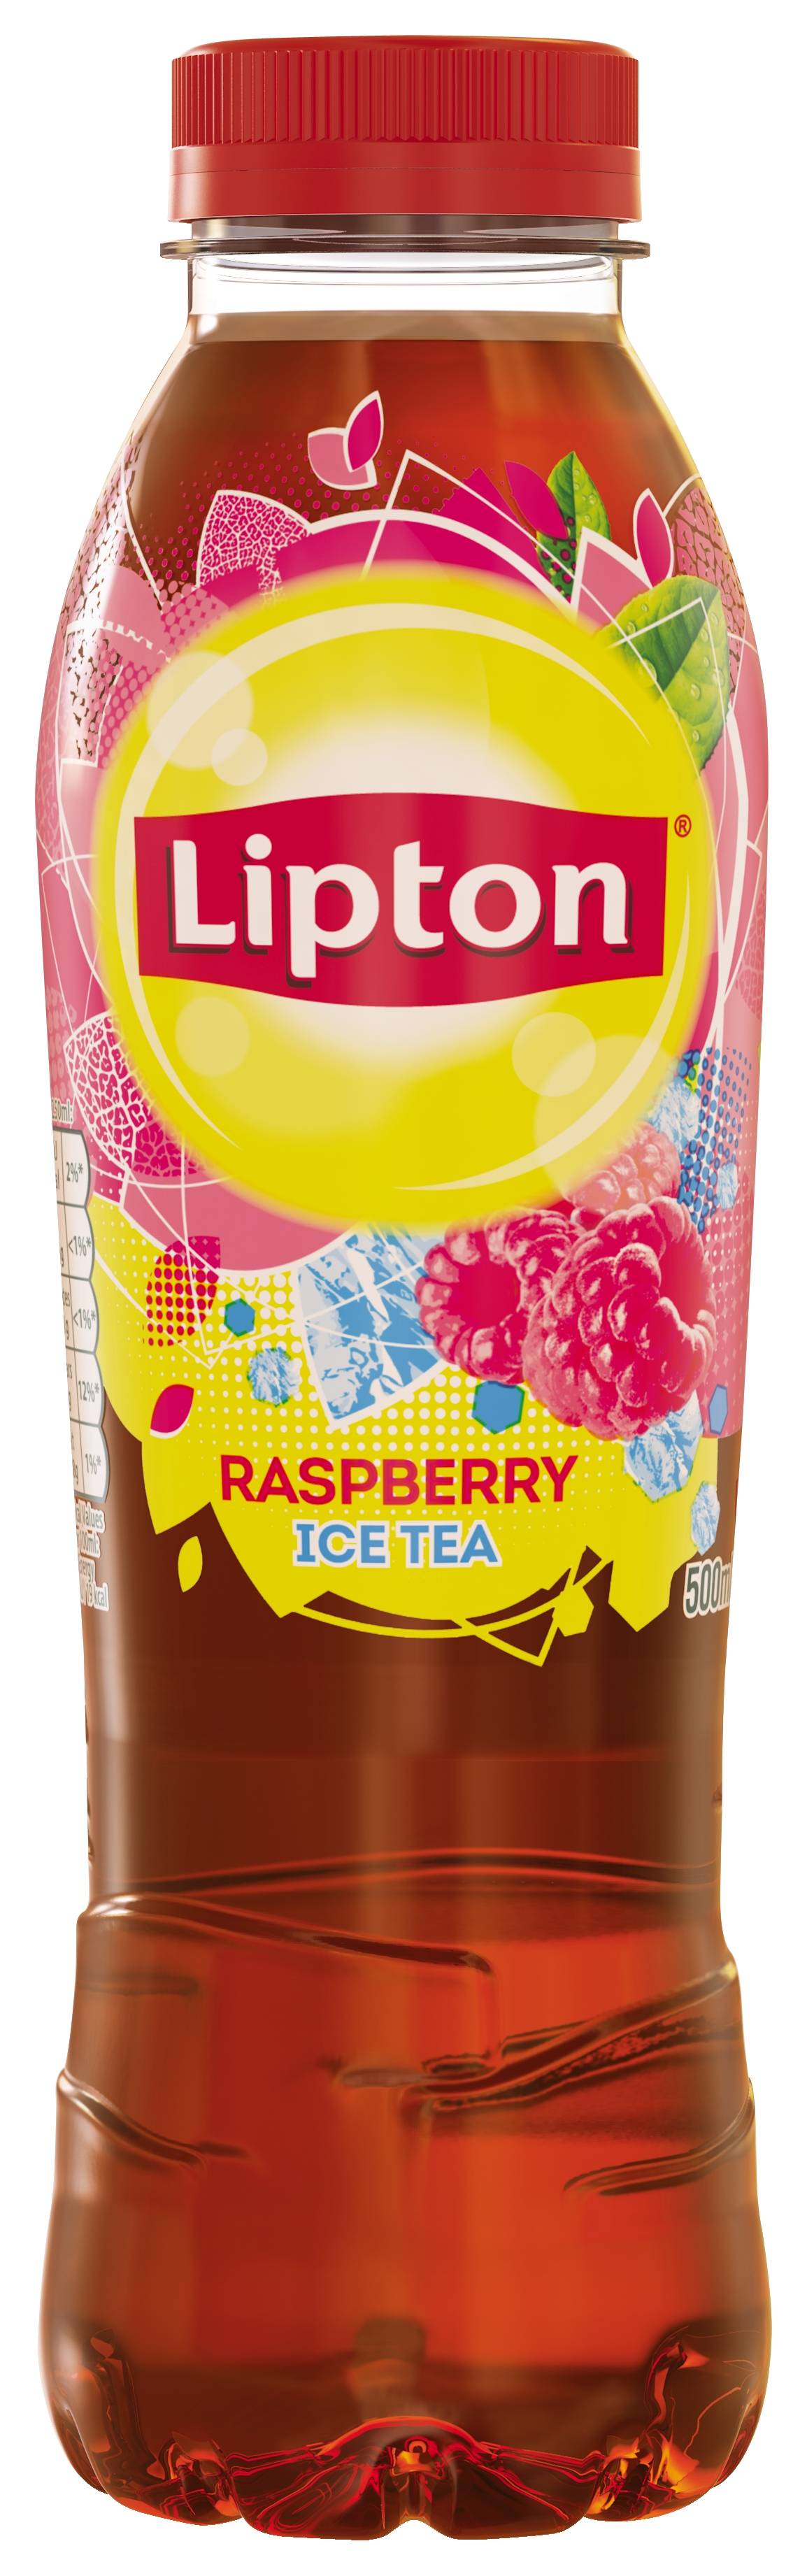 raspberry iced tea punch